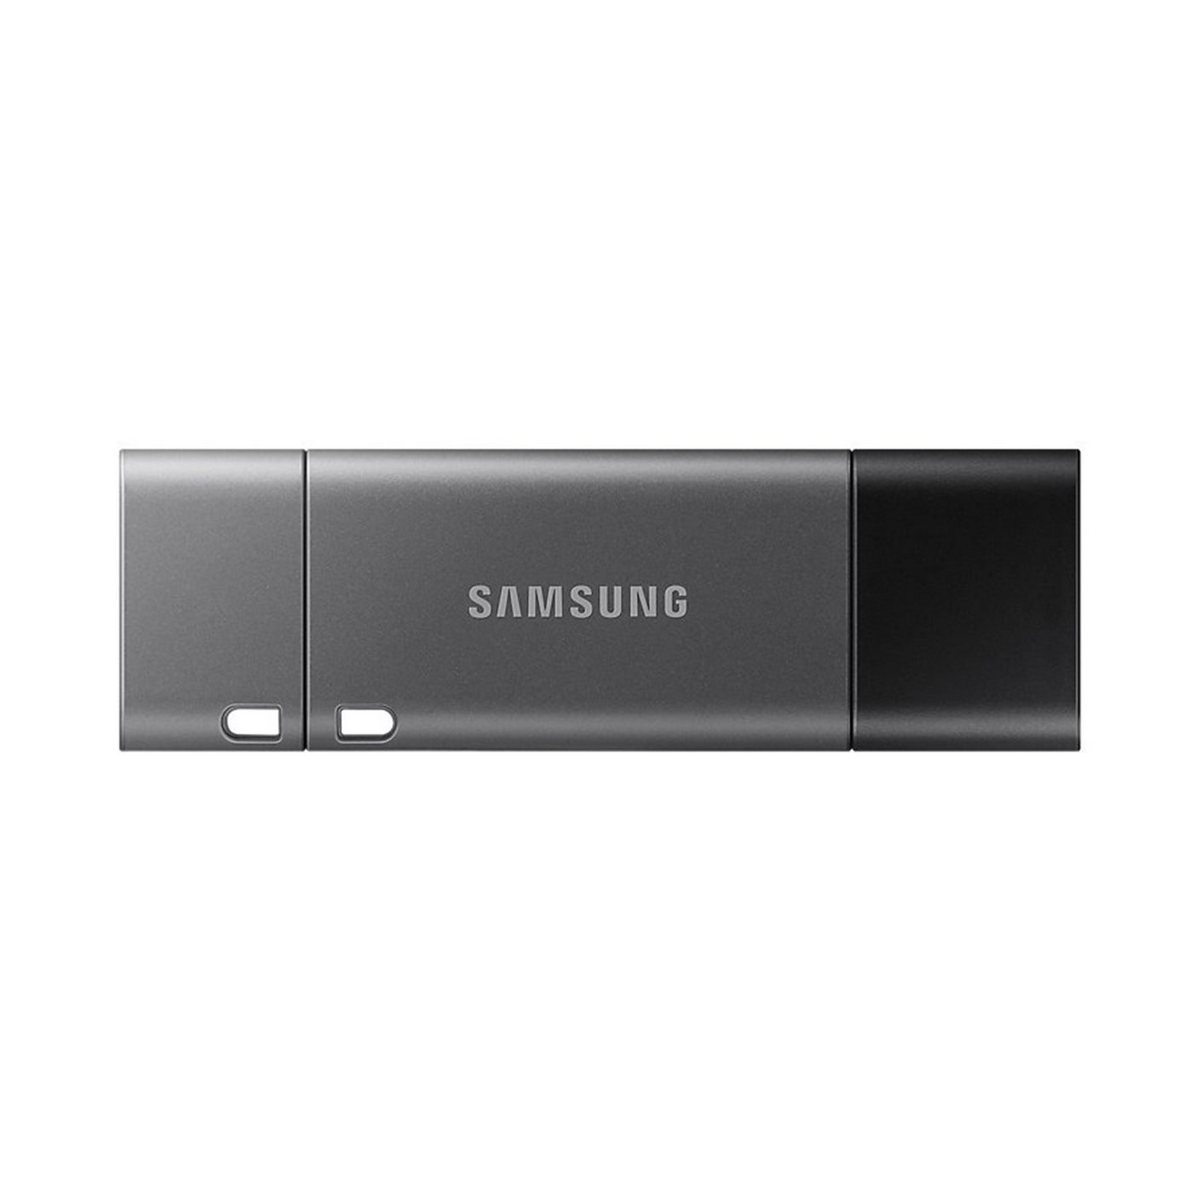 SAMSUNG USB 3.1 FLASH DISK 64GB OTG